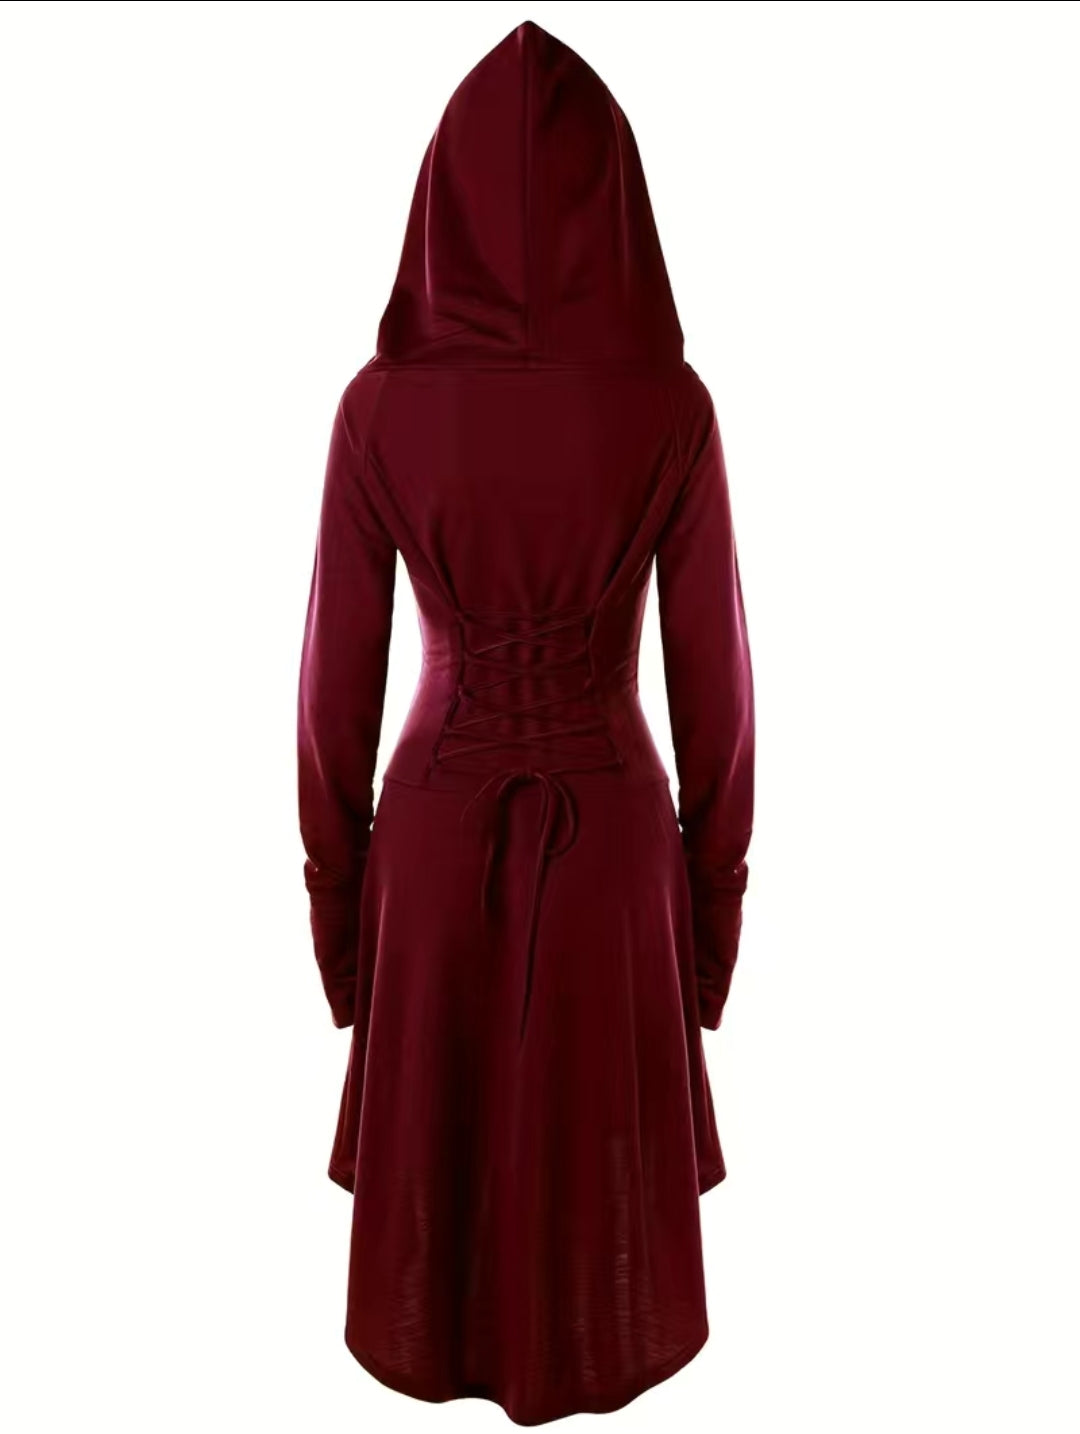 Burgundy Hooded Medieval Dress